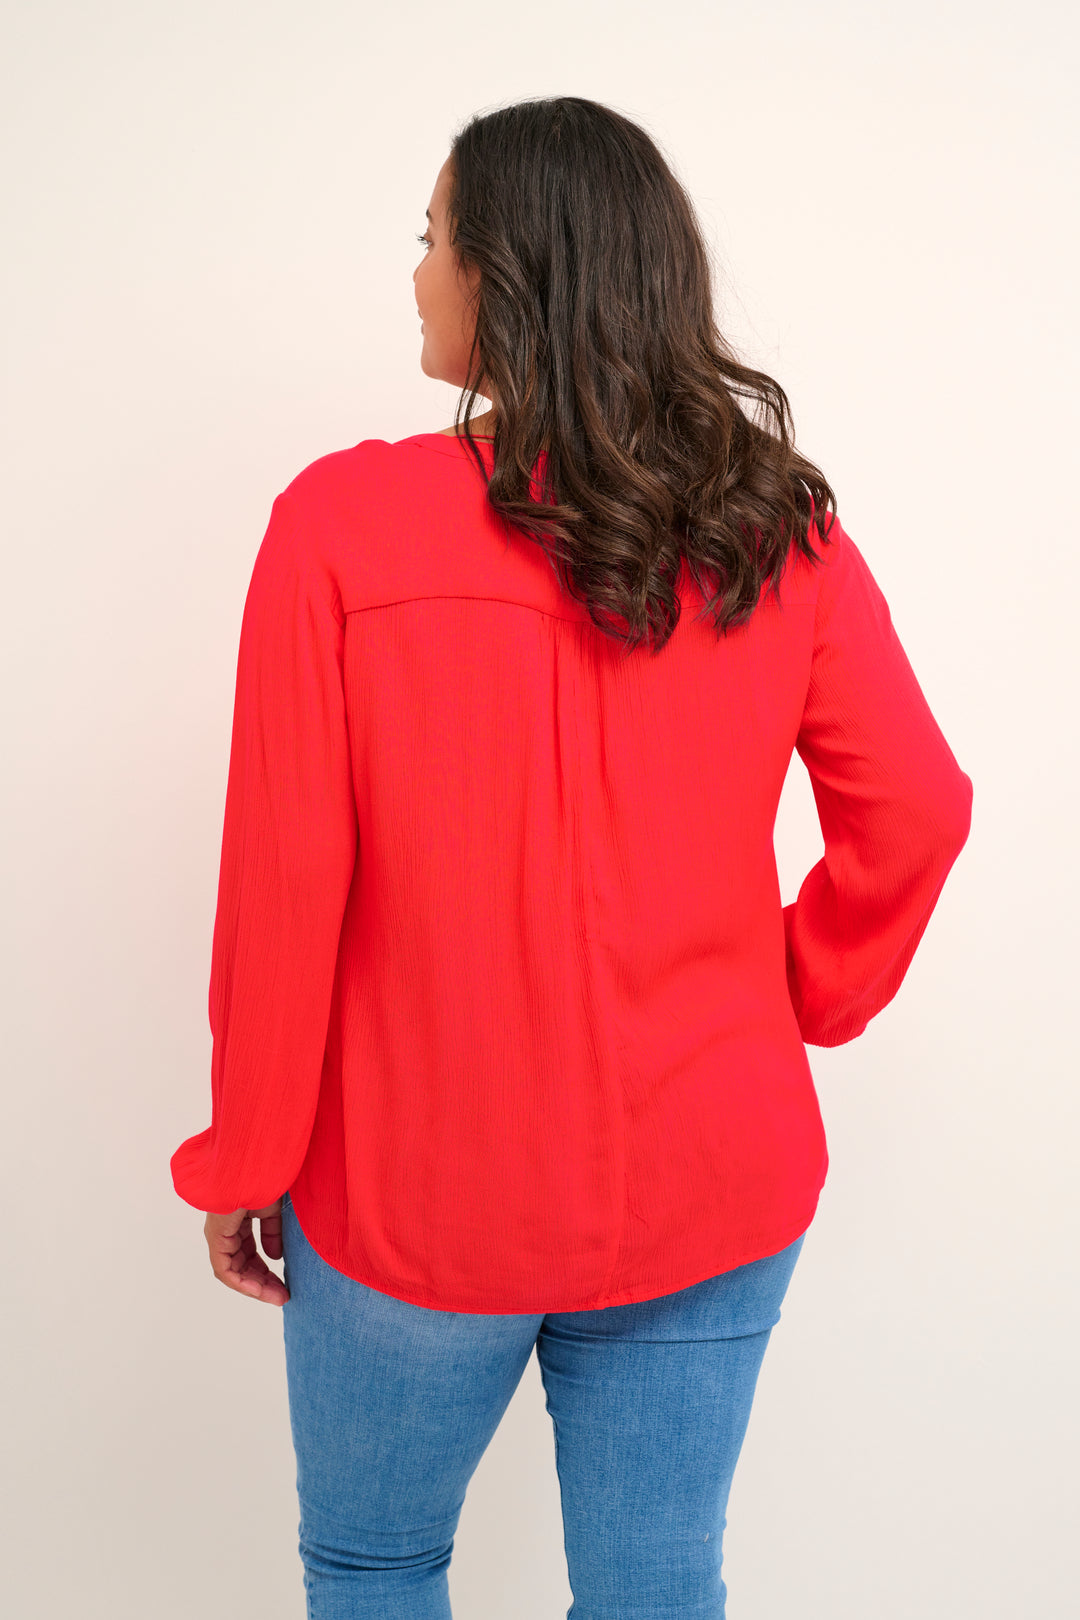 tijdloze fiery red blouse van ecovero viscose